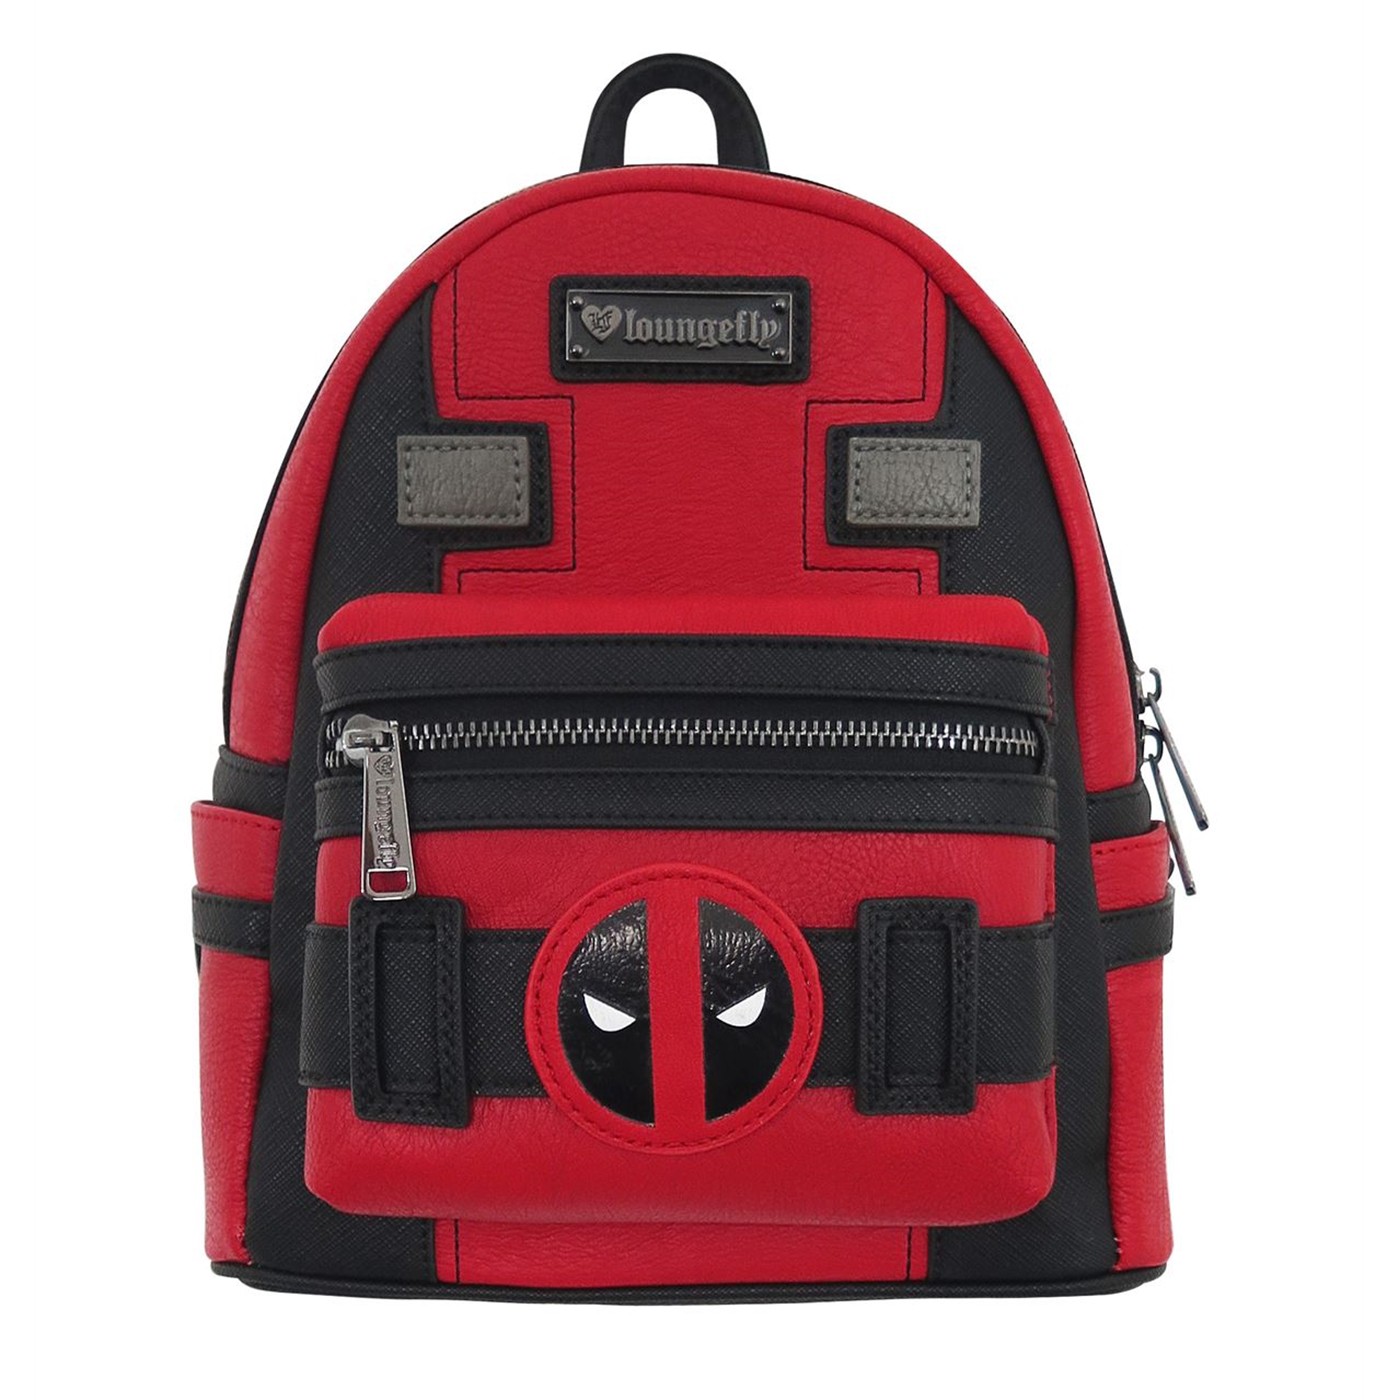 Deadpool Loungefly Backpack